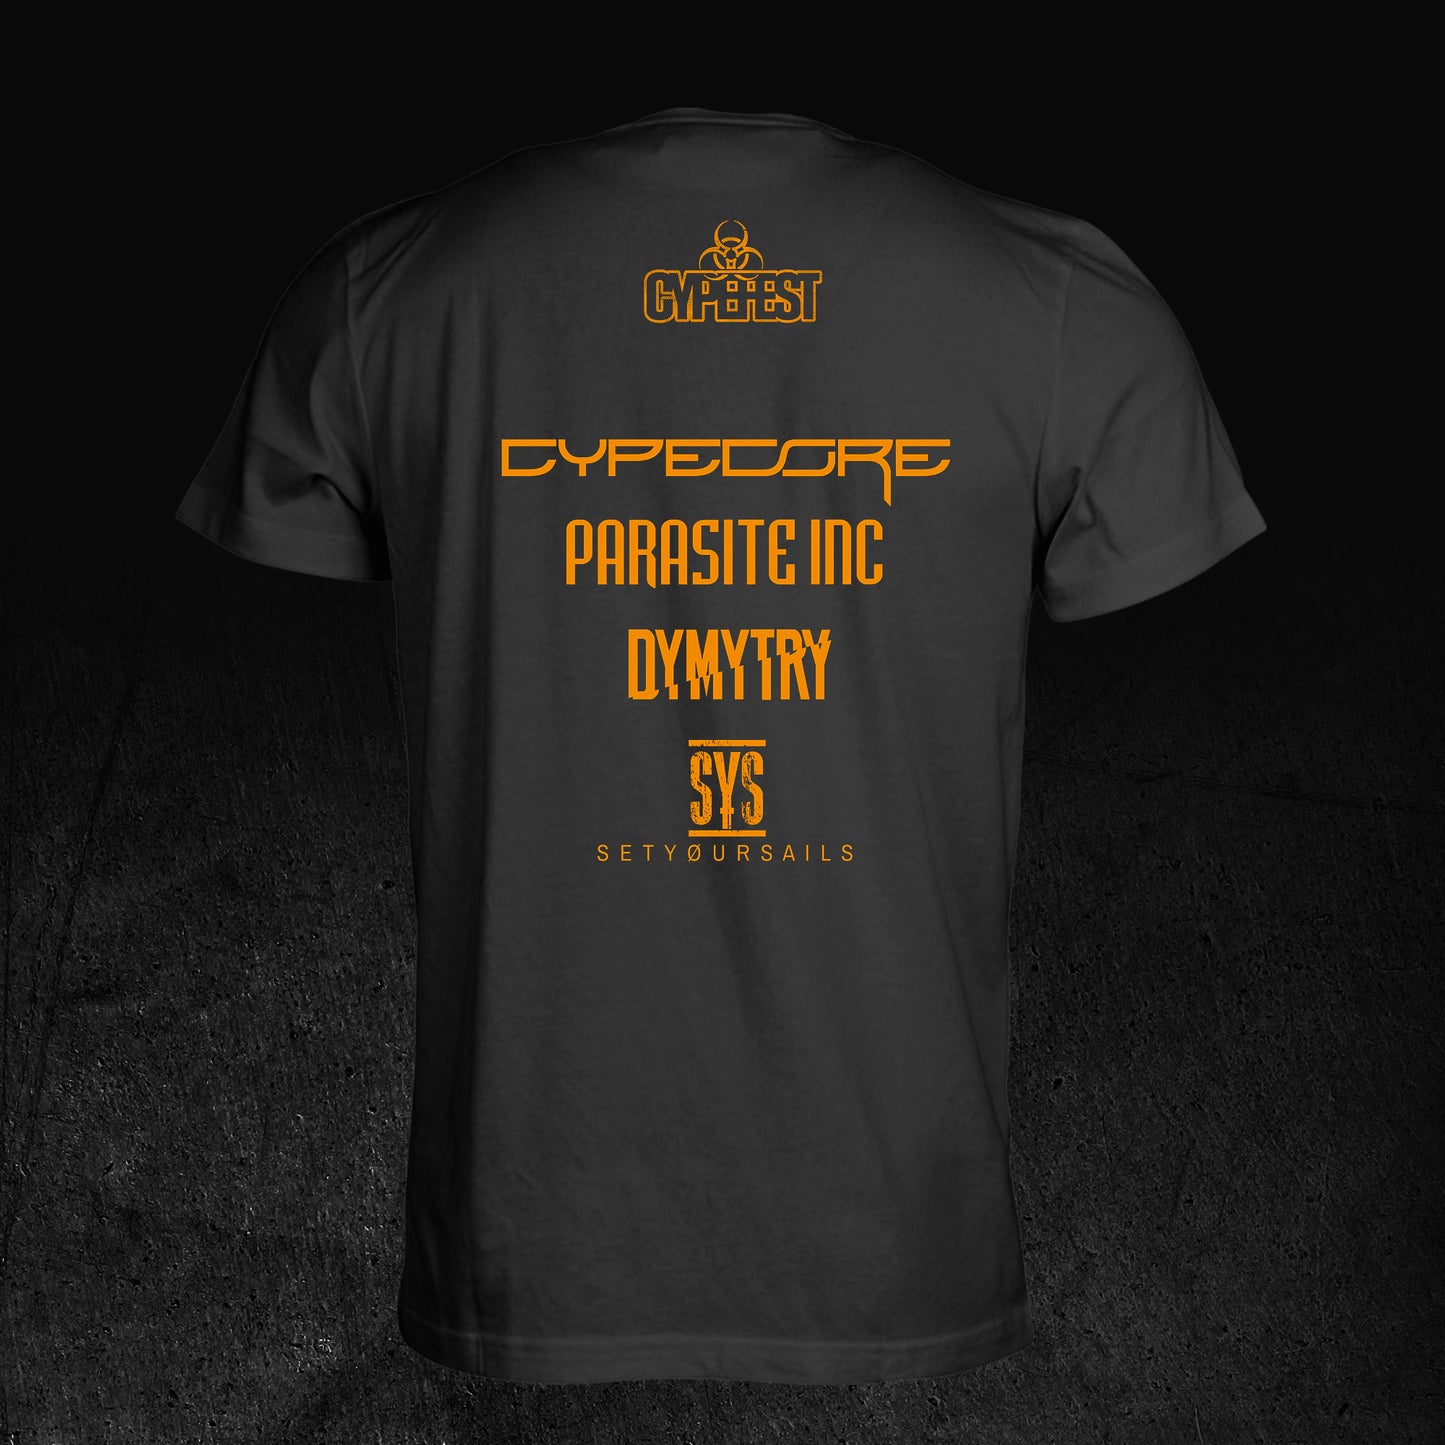 Design Shirt "Cypefest"